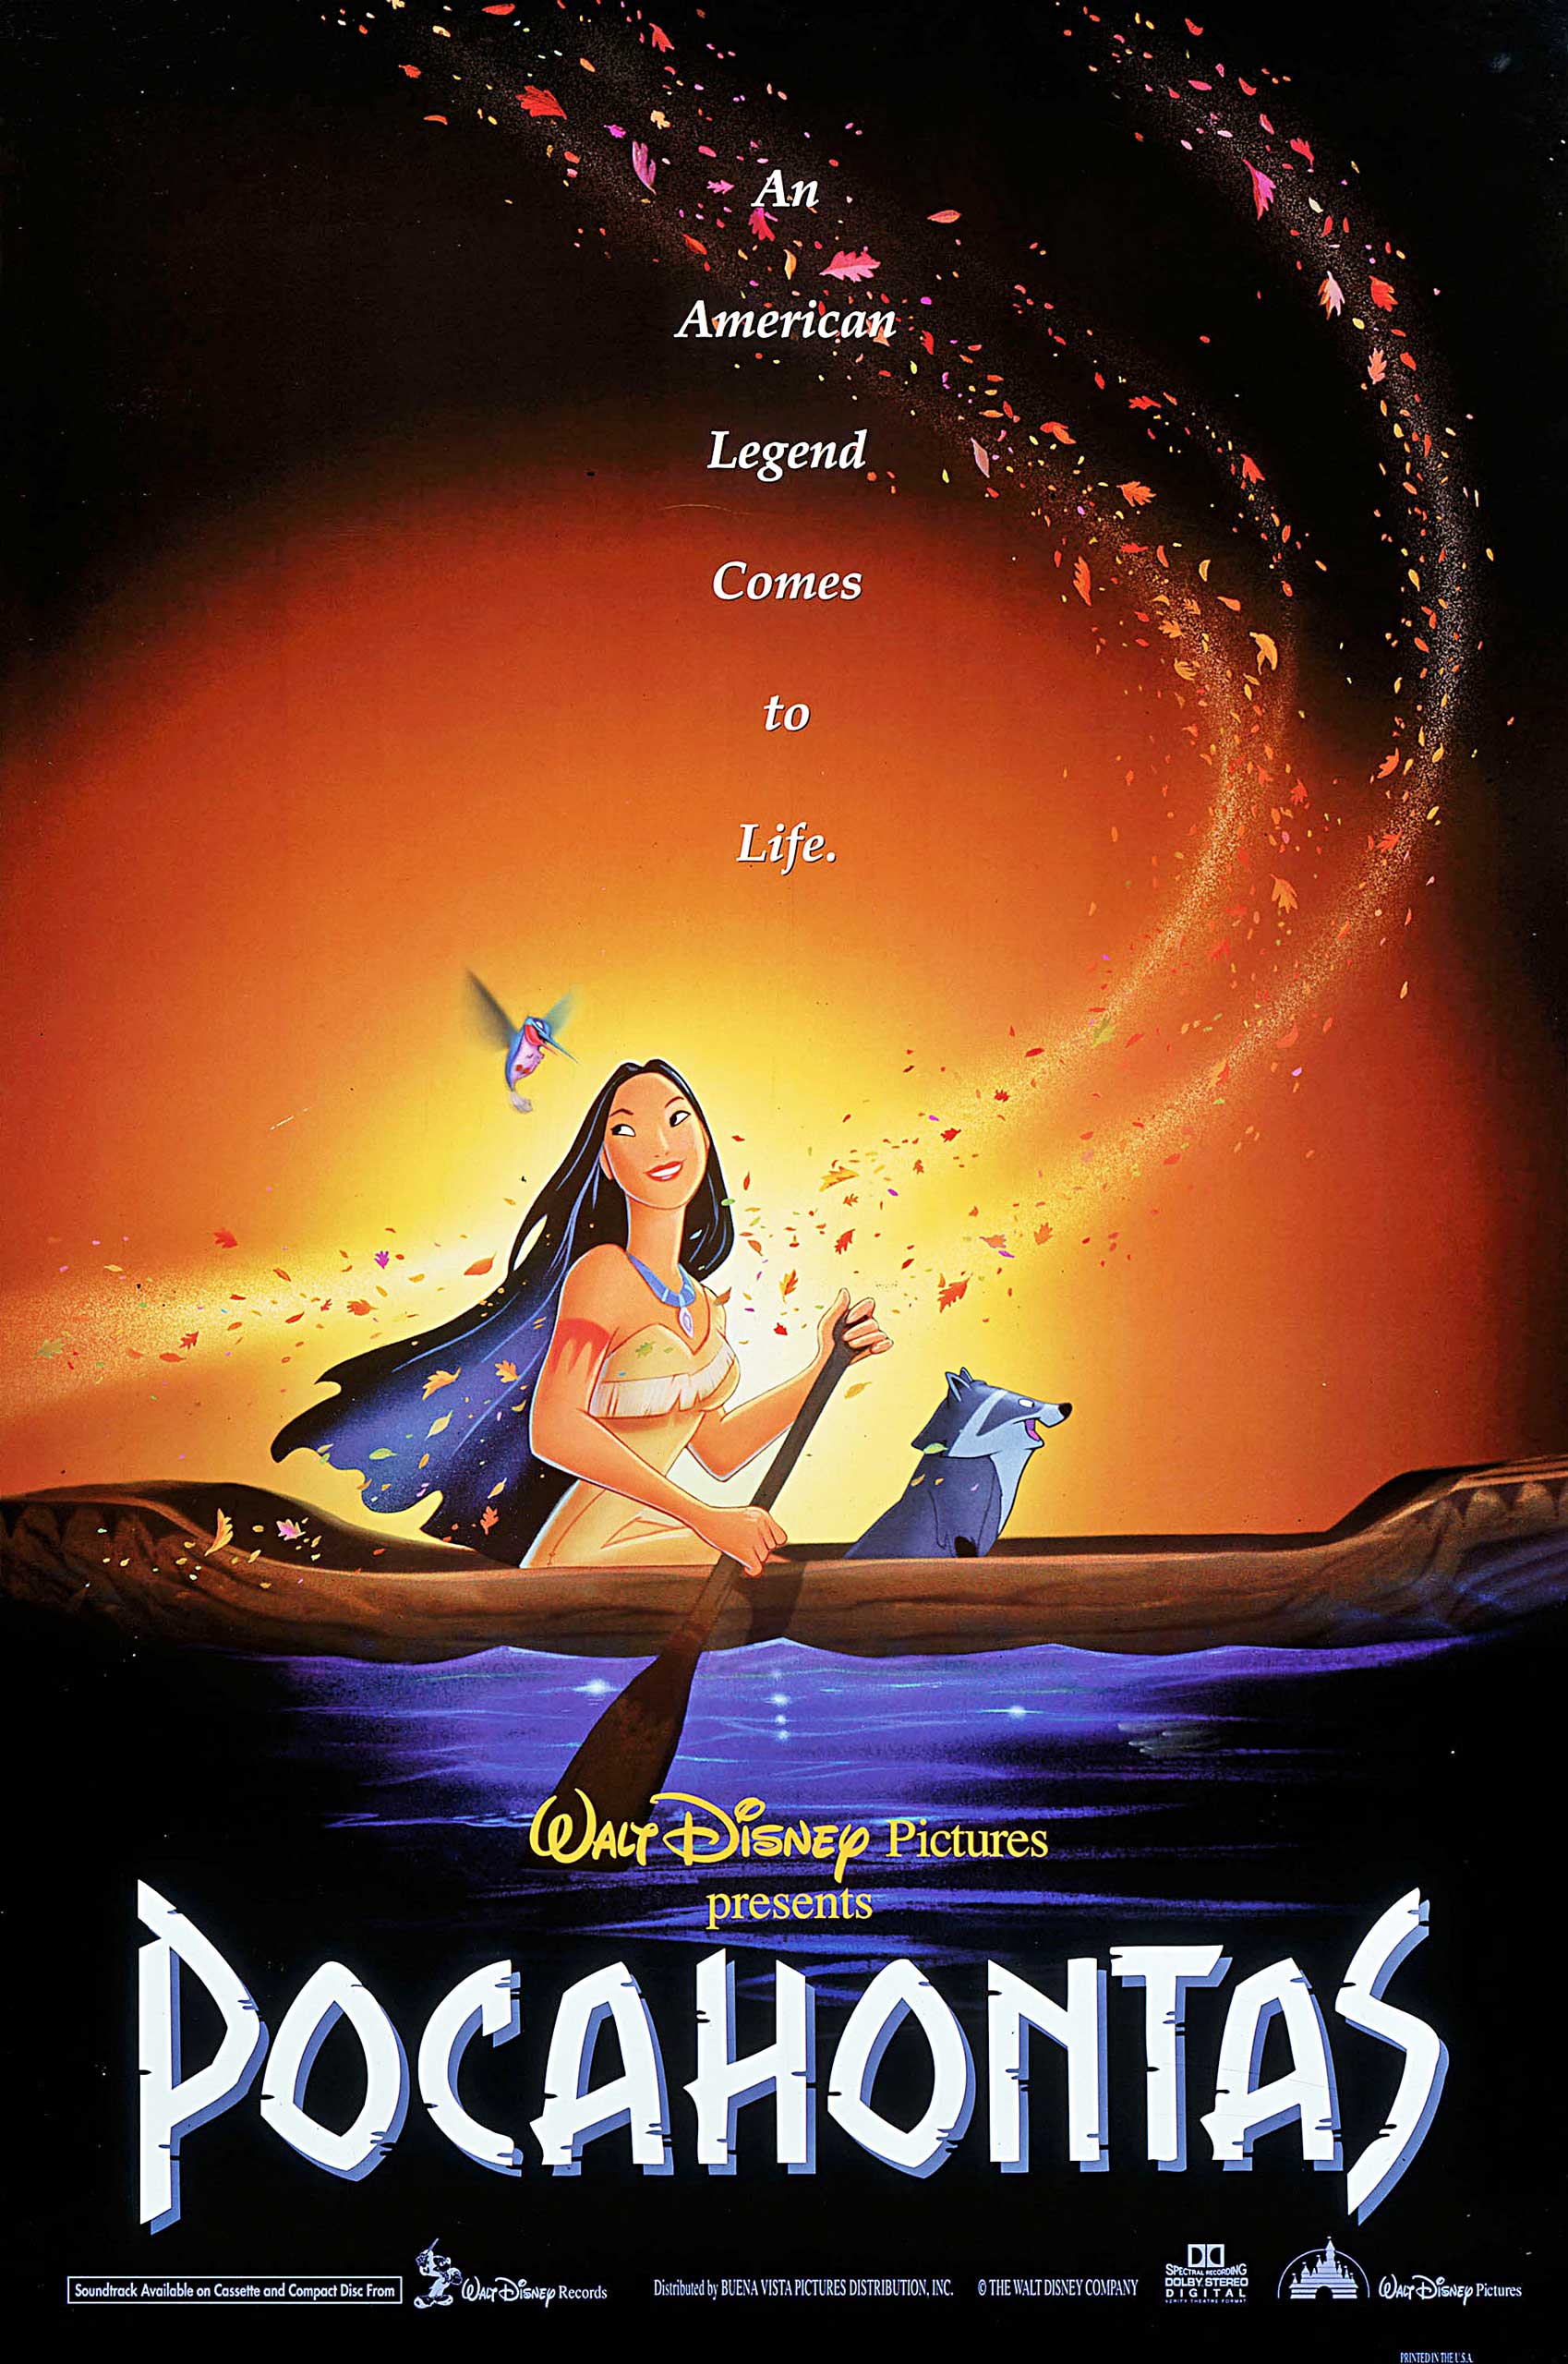 Walt-Disney-Posters-Pocahontas-walt-disney-characters-34865126-1990-3000